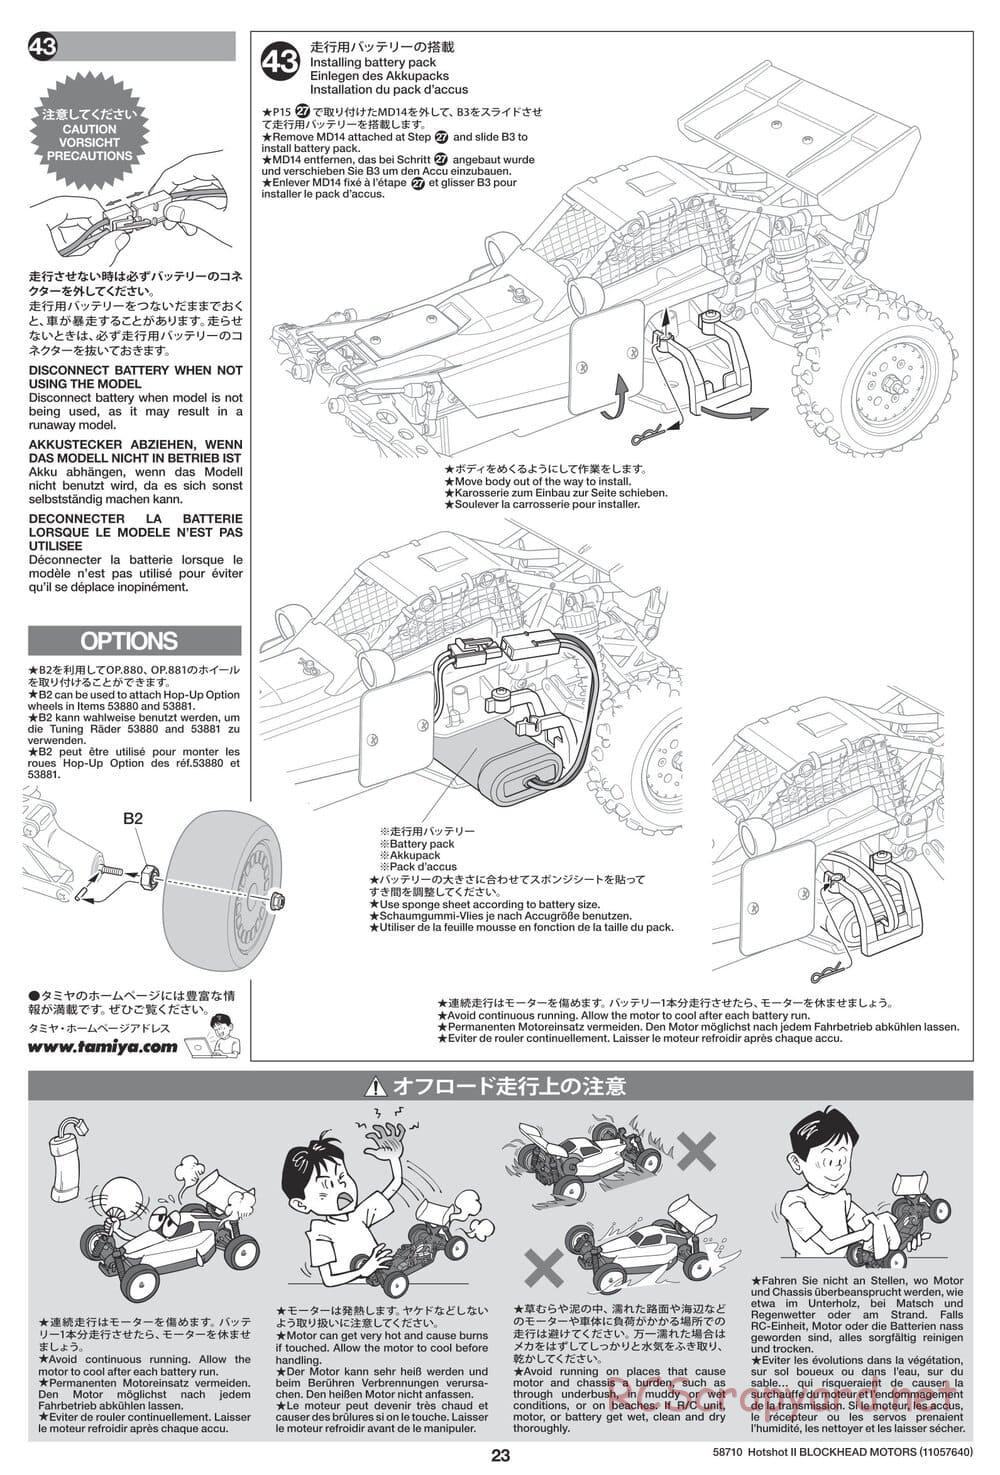 Tamiya - Hotshot II Blockhead Motors - HS Chassis - Manual - Page 23